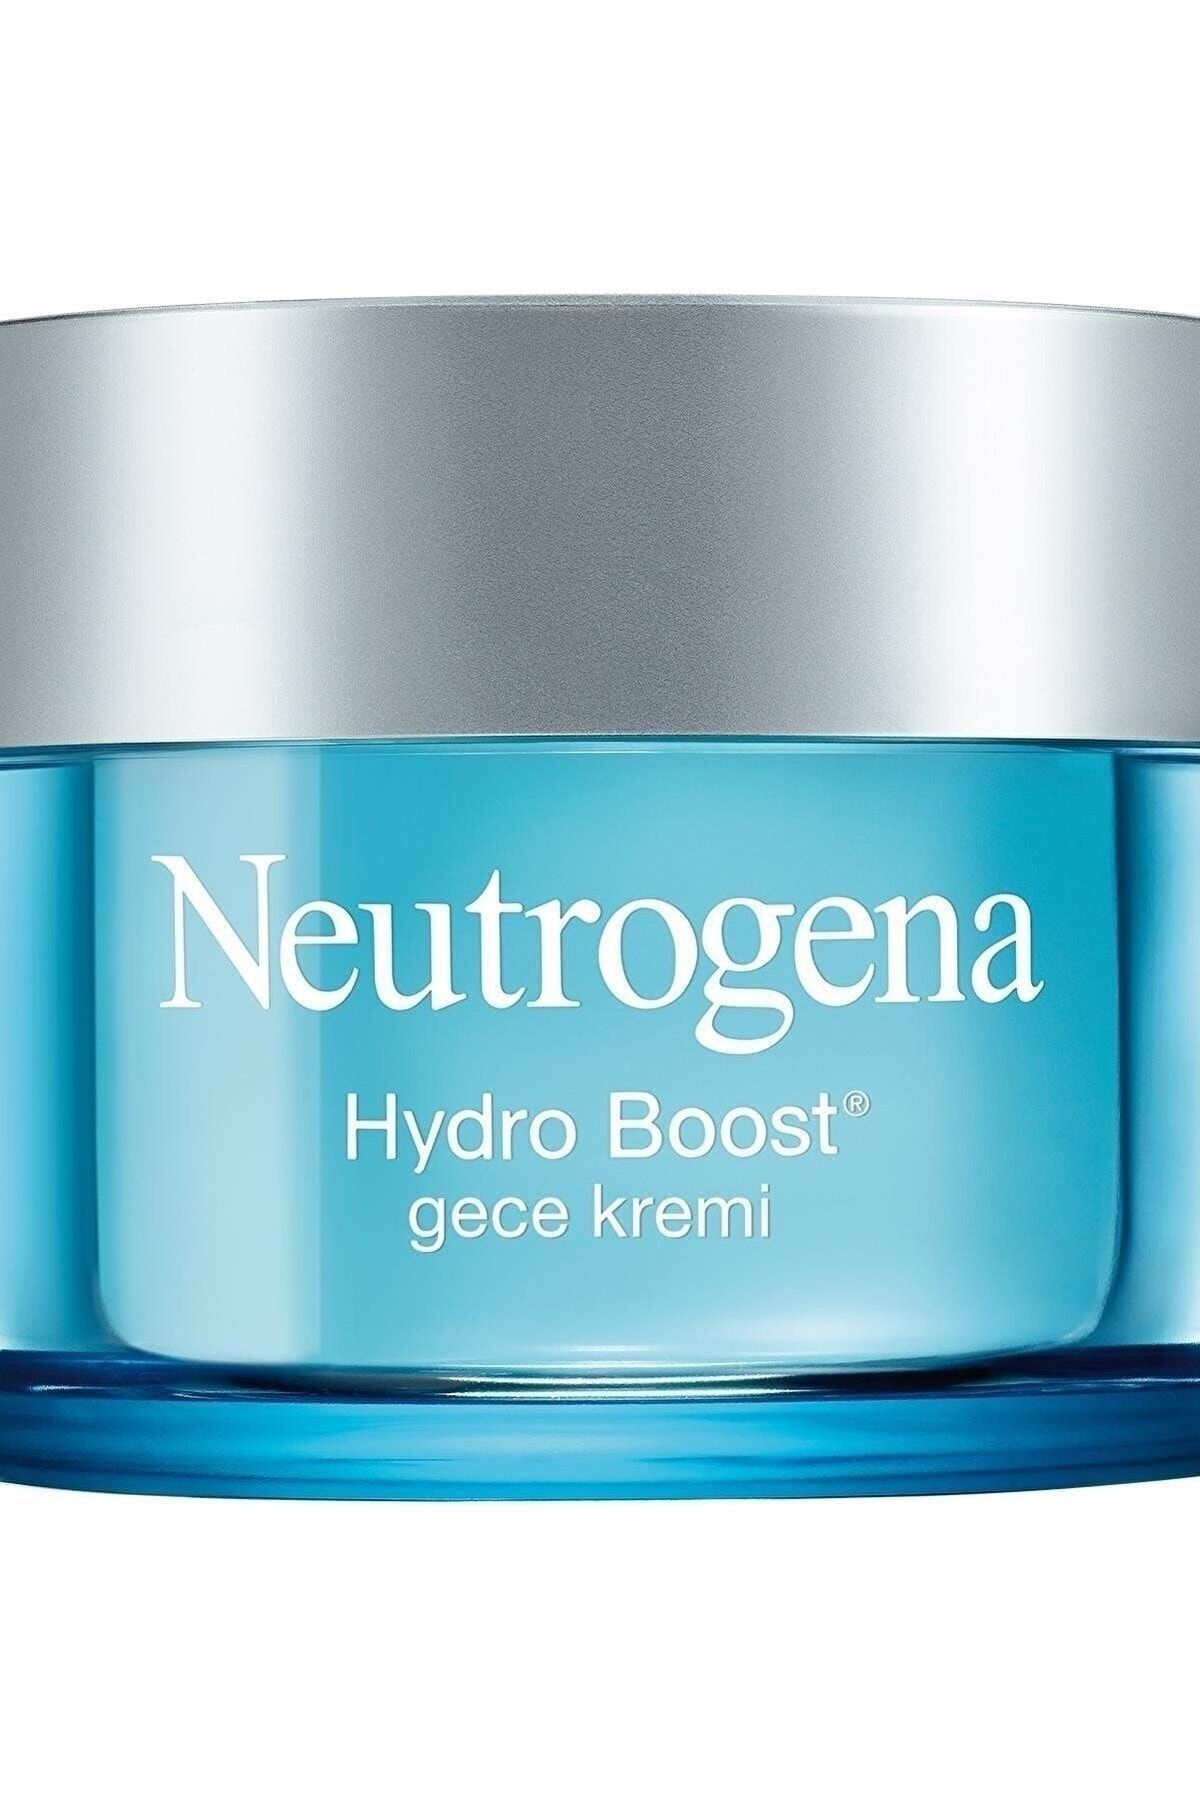 Neutrogena Hydro Boost Gece Kremi 50 Ml 45454